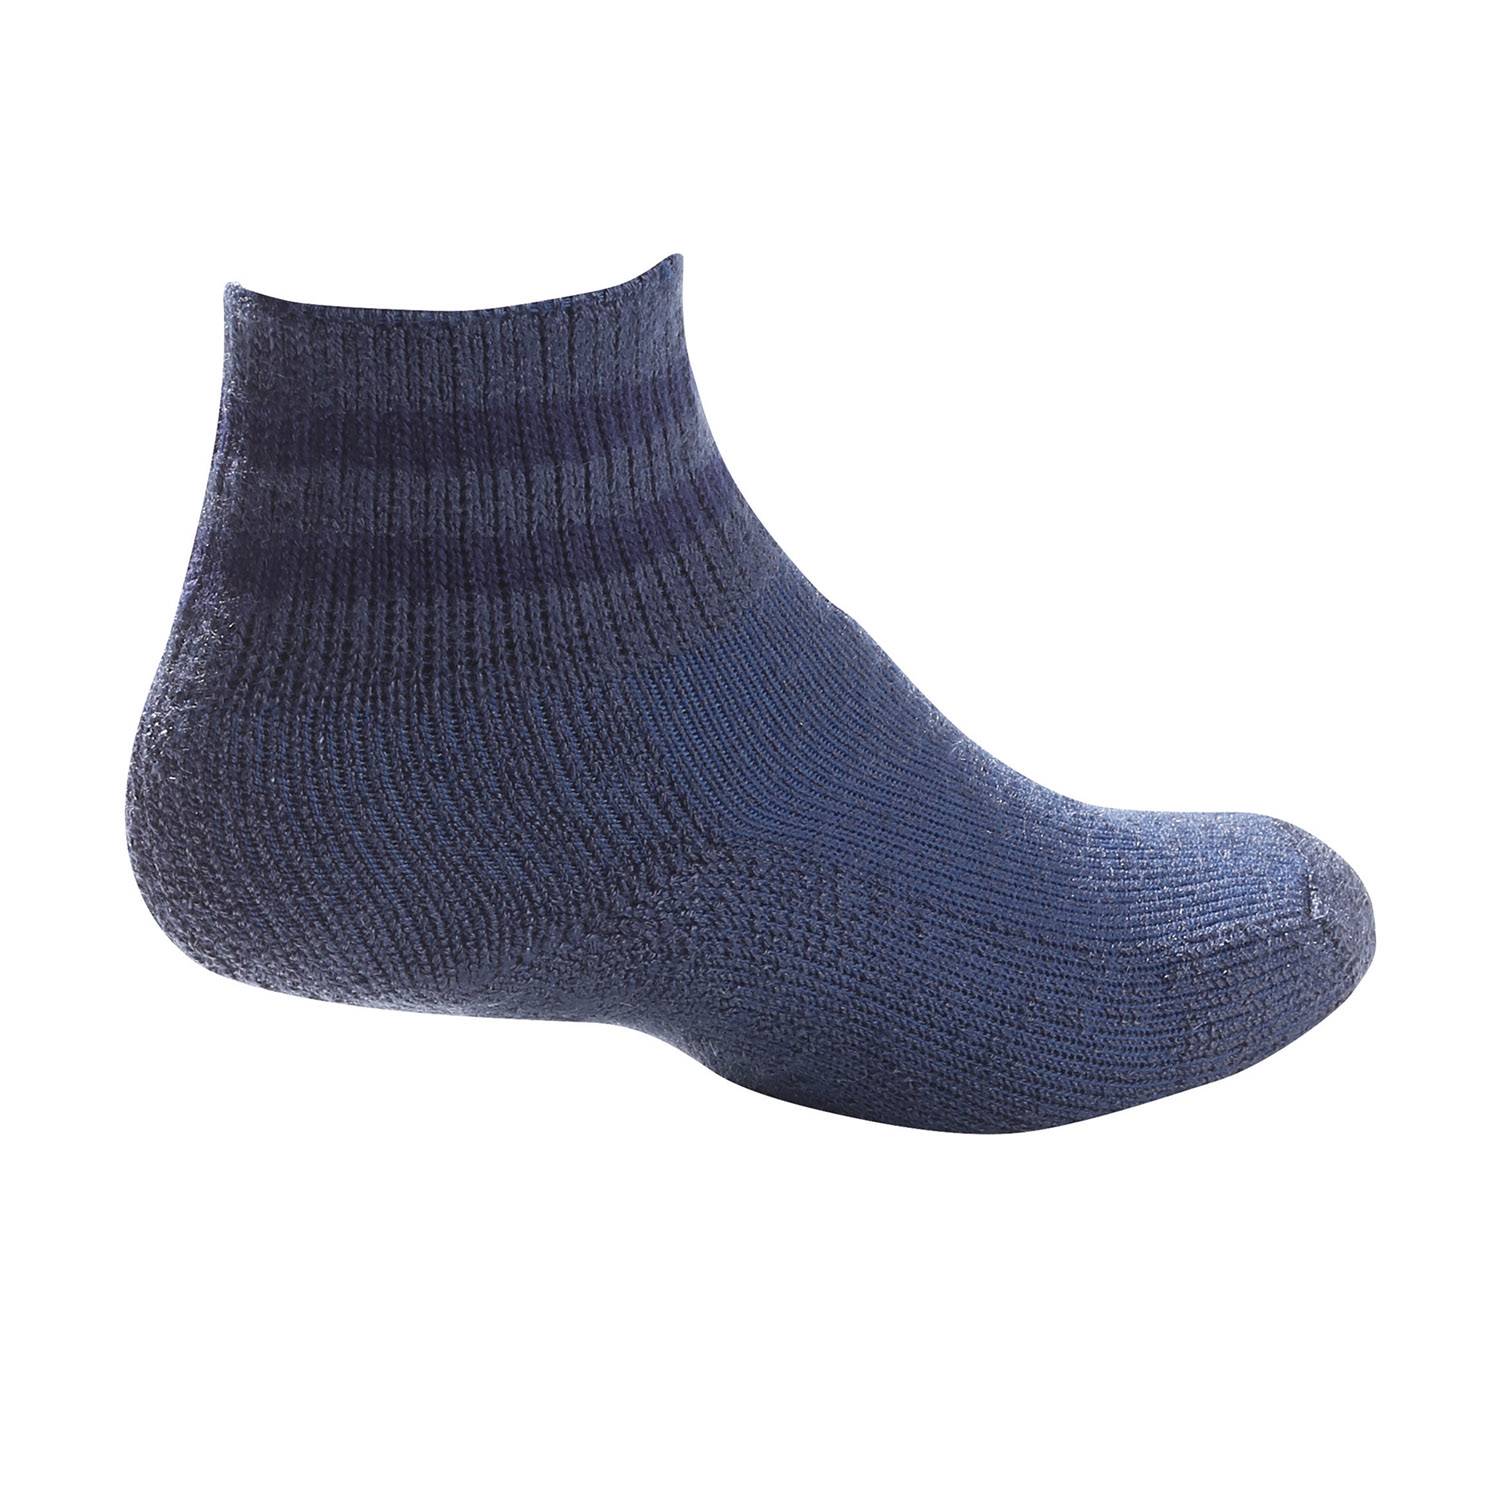 Thorlo Postal Approved Ankle Socks (THORLOANK)